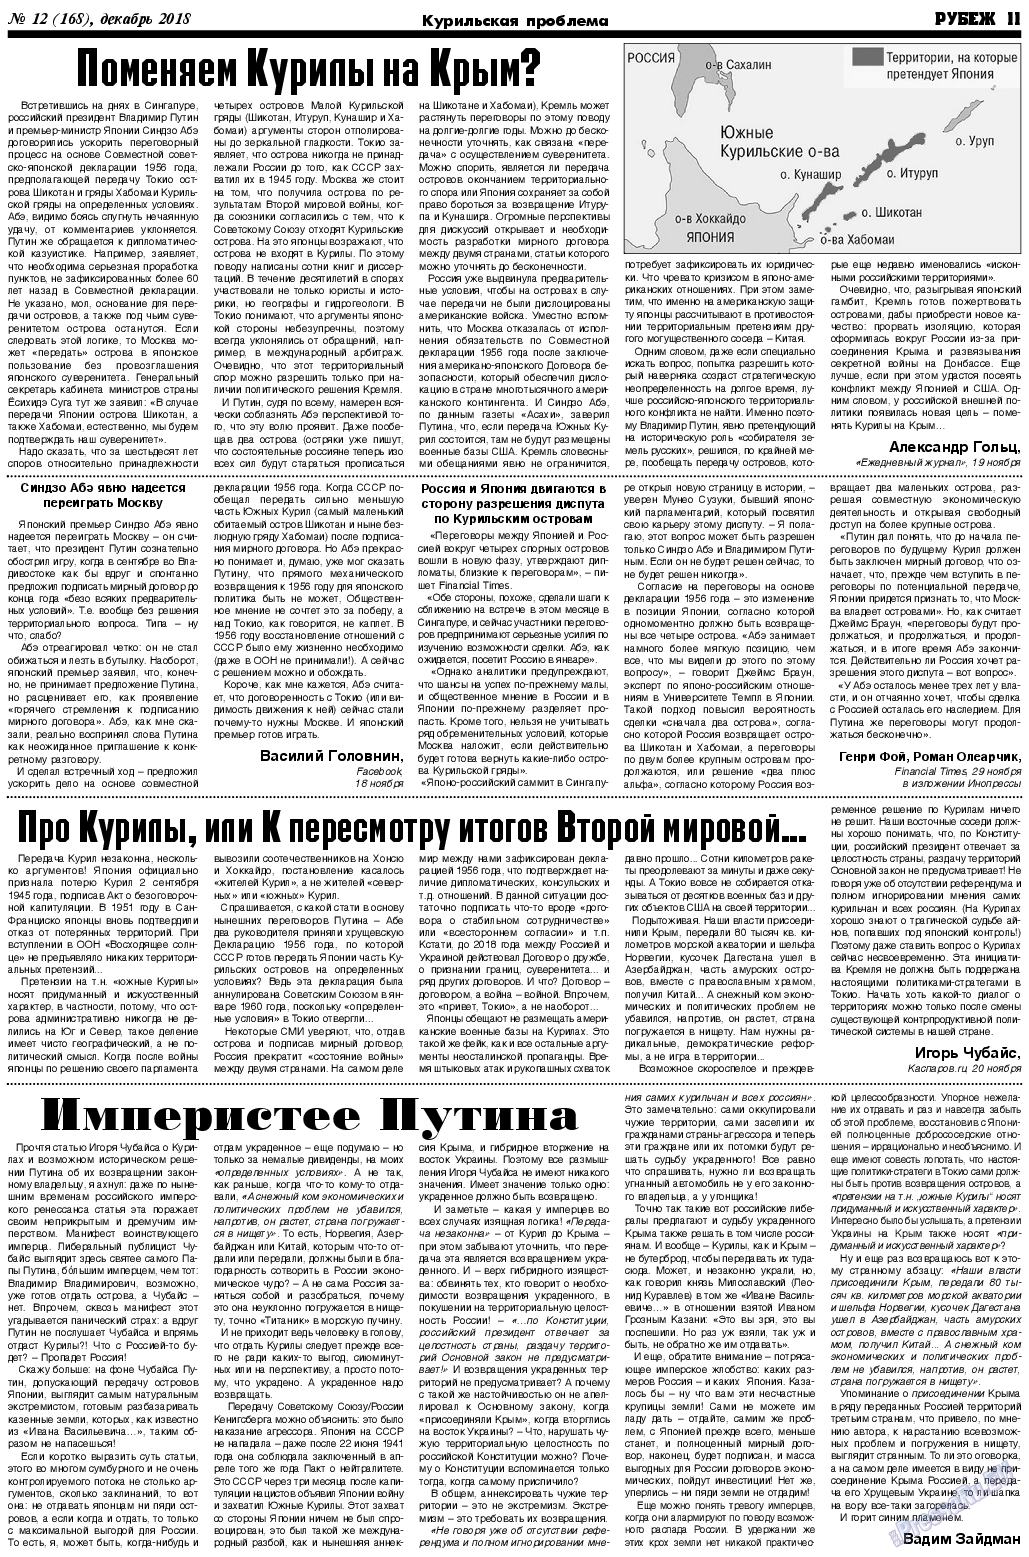 Рубеж, газета. 2018 №12 стр.11